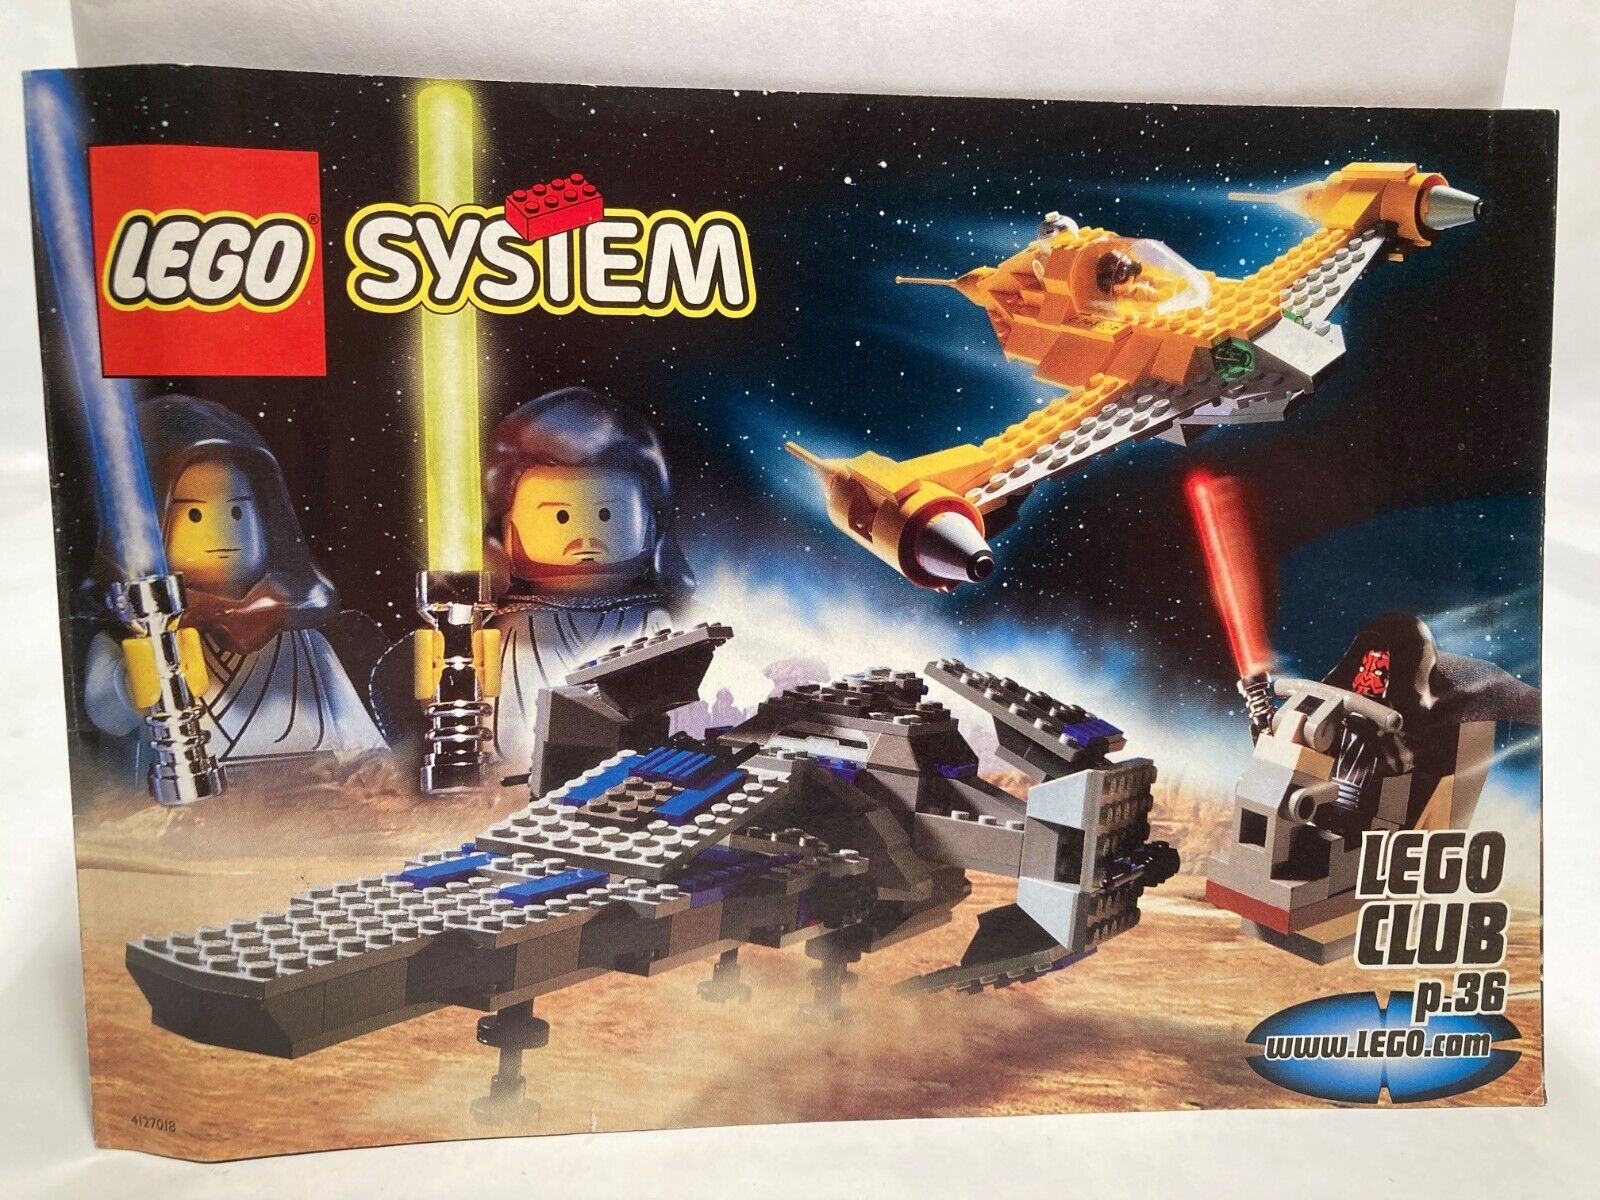 Lego 1999 Catalog Booklet 4127018 Star Wars Ninja Rock Raiders more